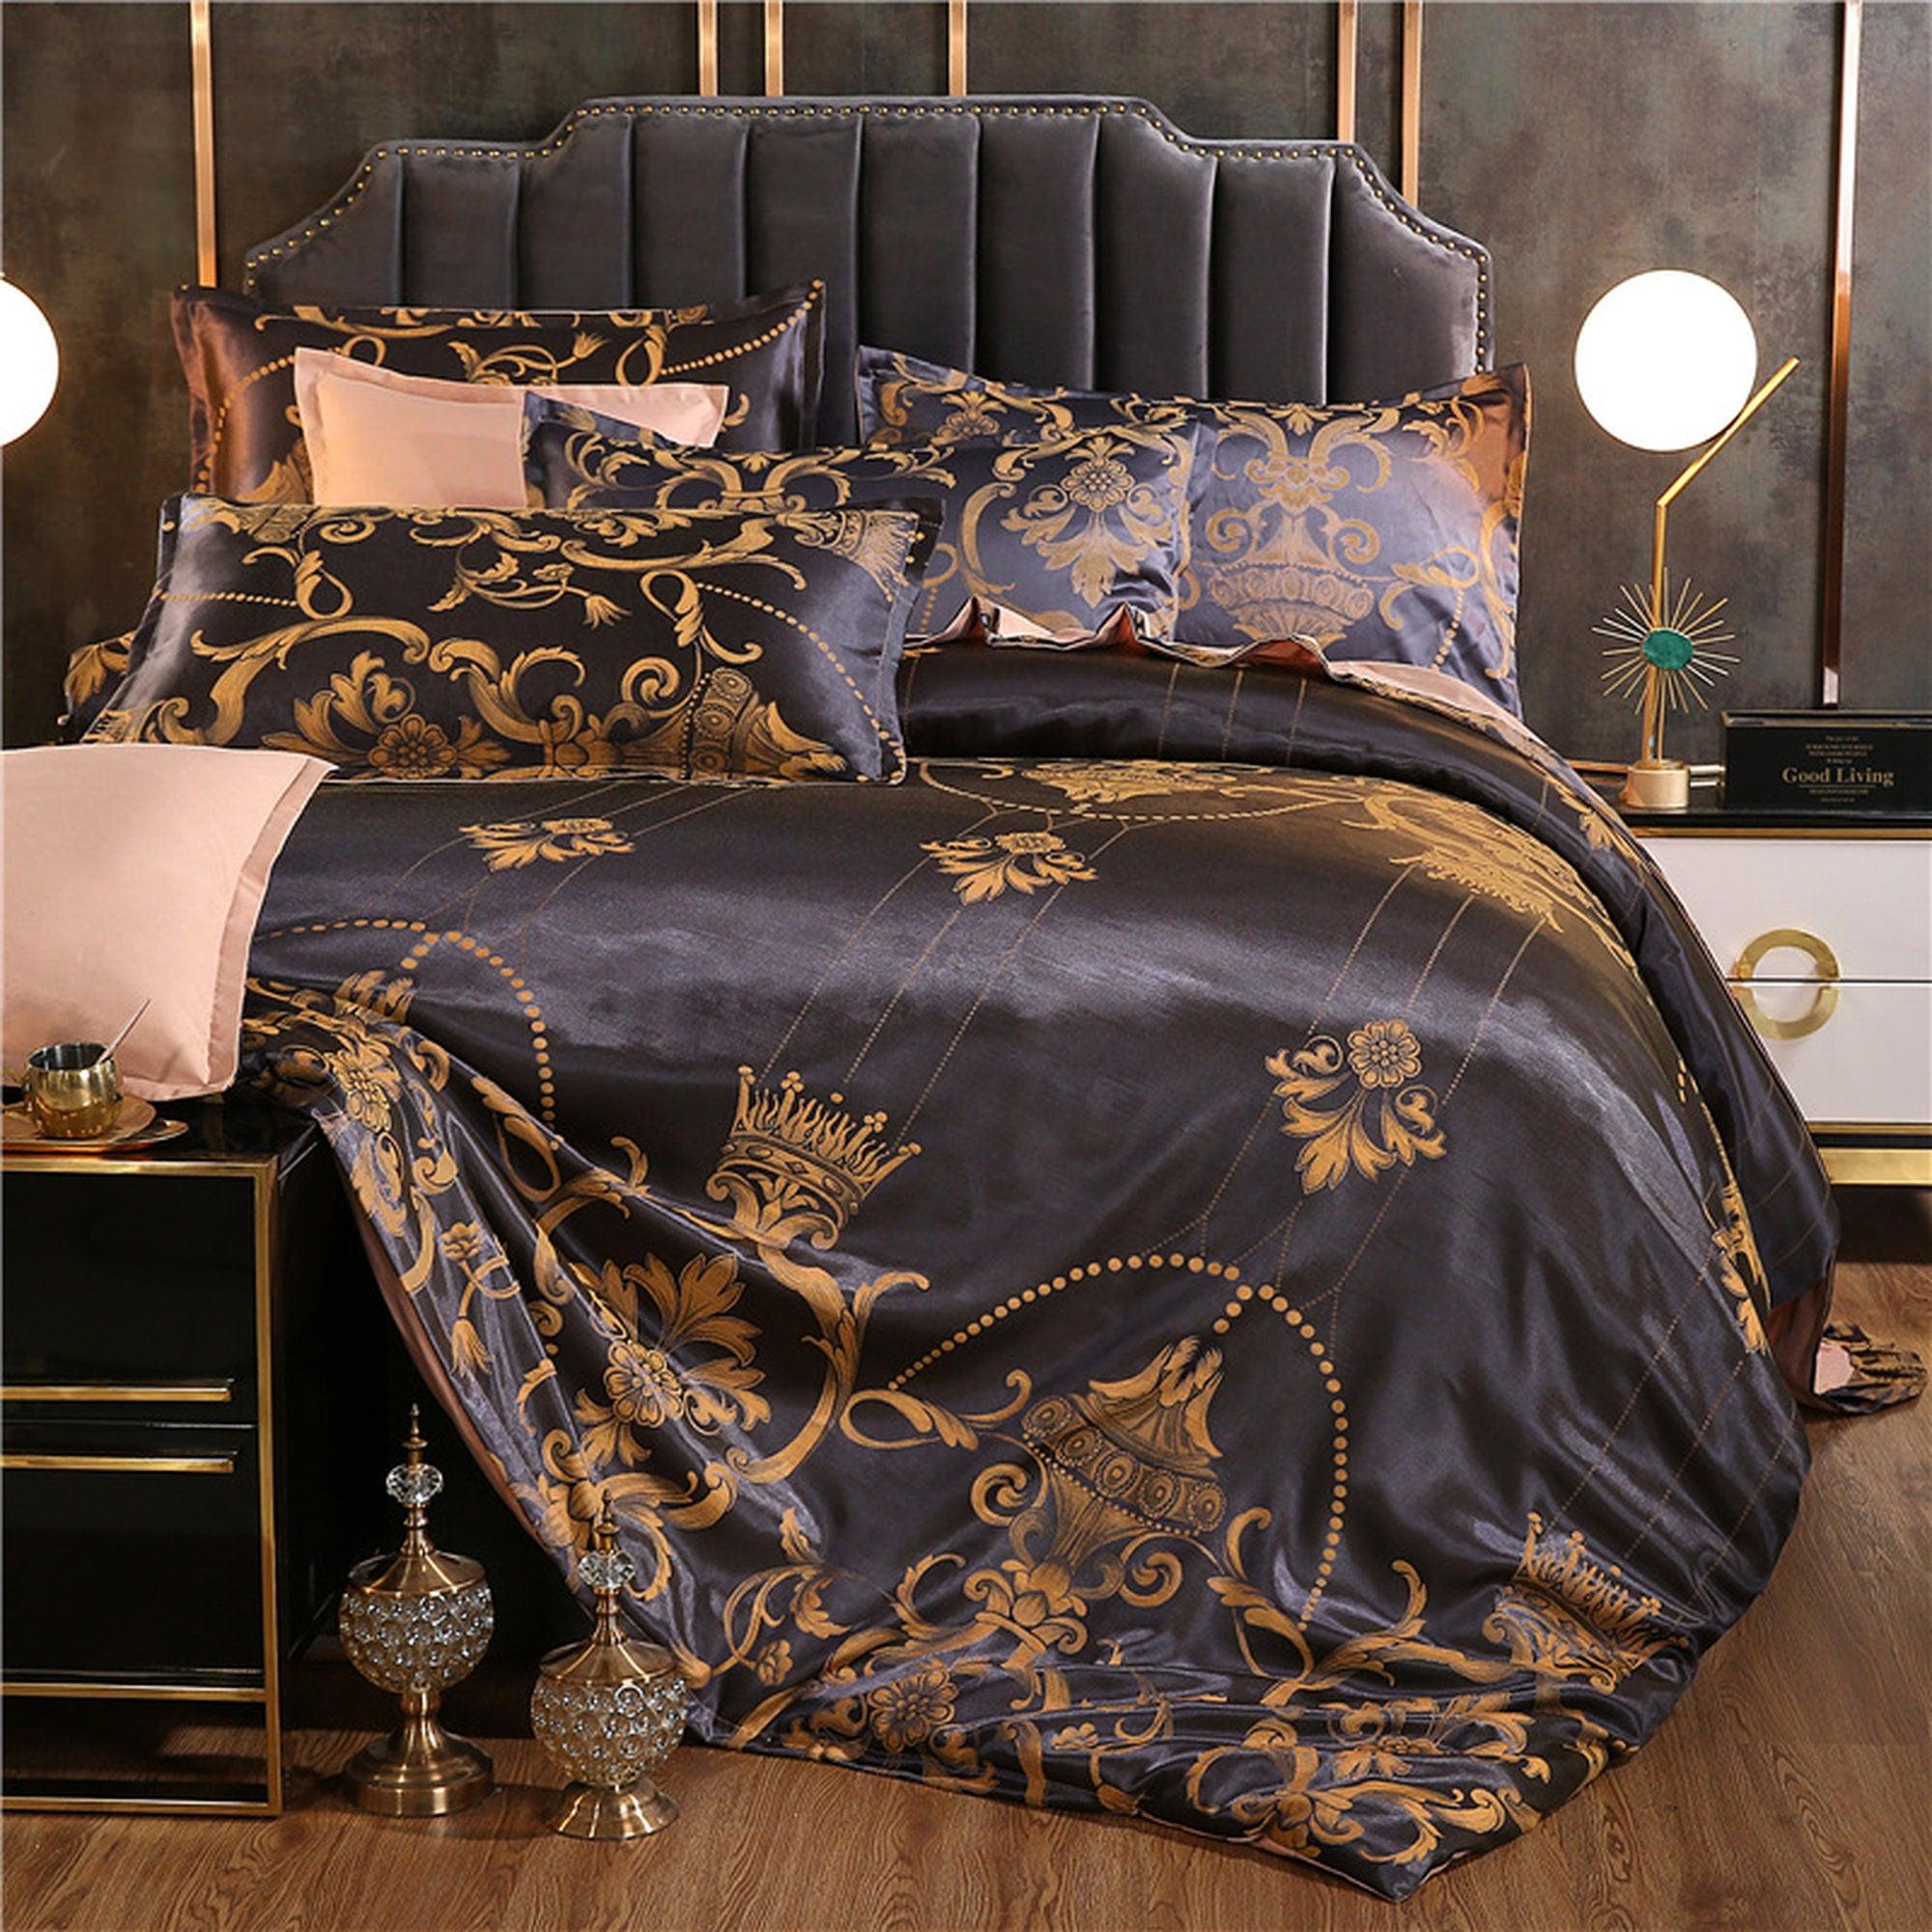 daintyduvet Luxury Duvet Cover Set, Jacquard Fabric Aesthetic Bedding Decorative, Embroidered Bedding Set